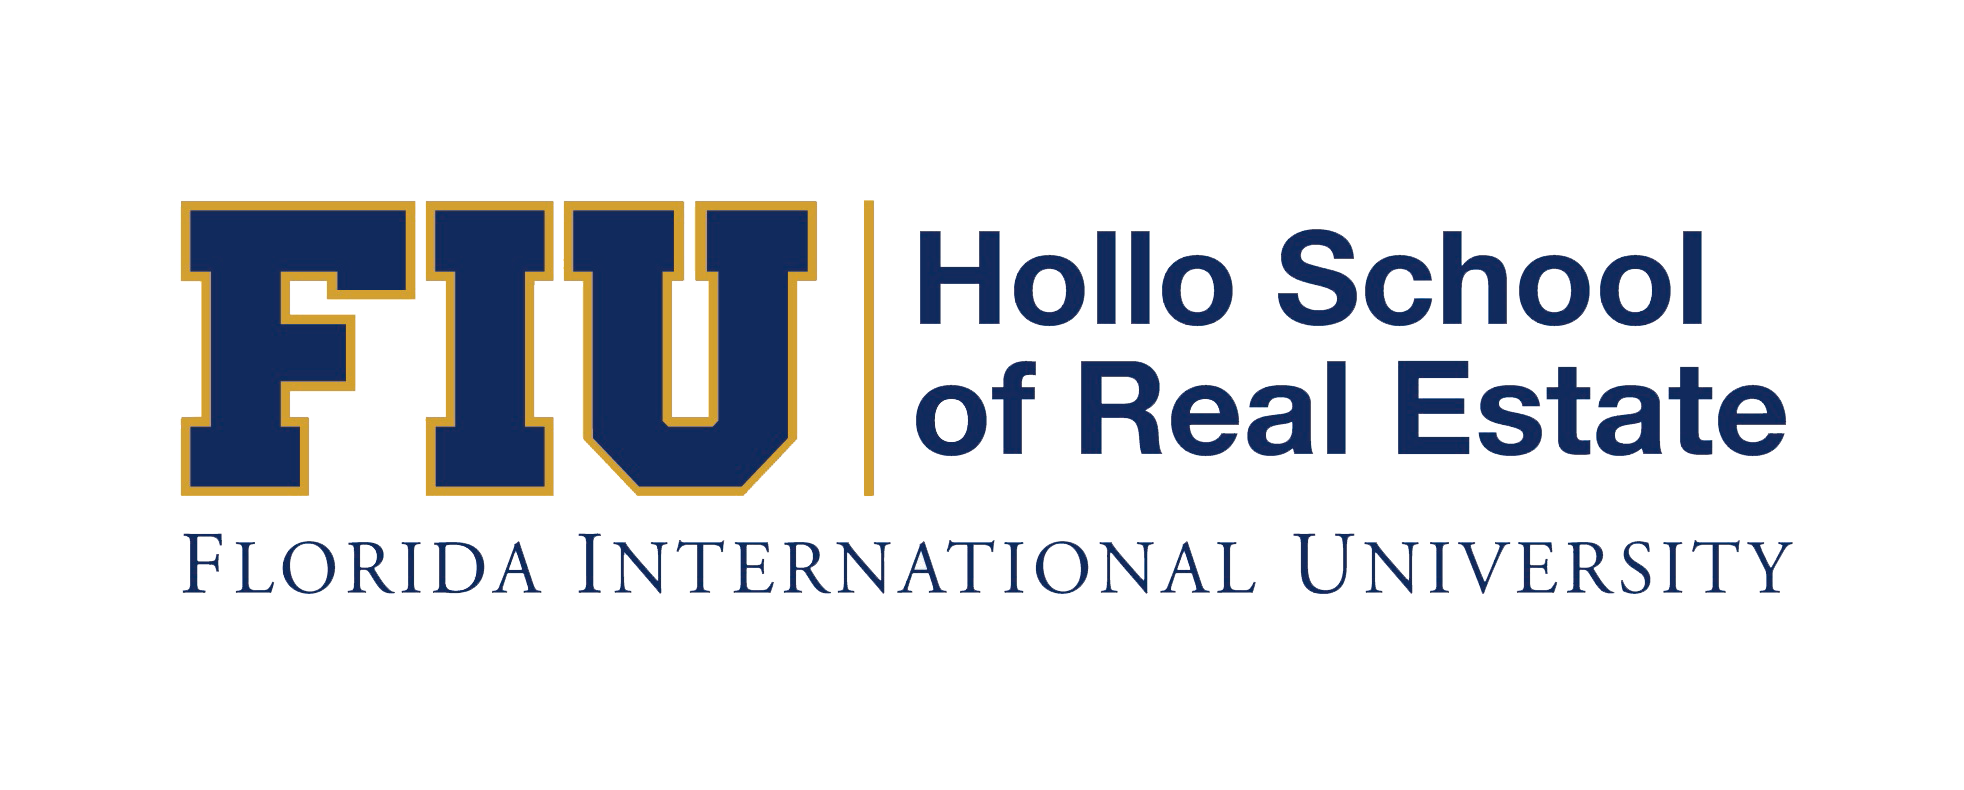 Florida International University–Hollo School of Real Estate